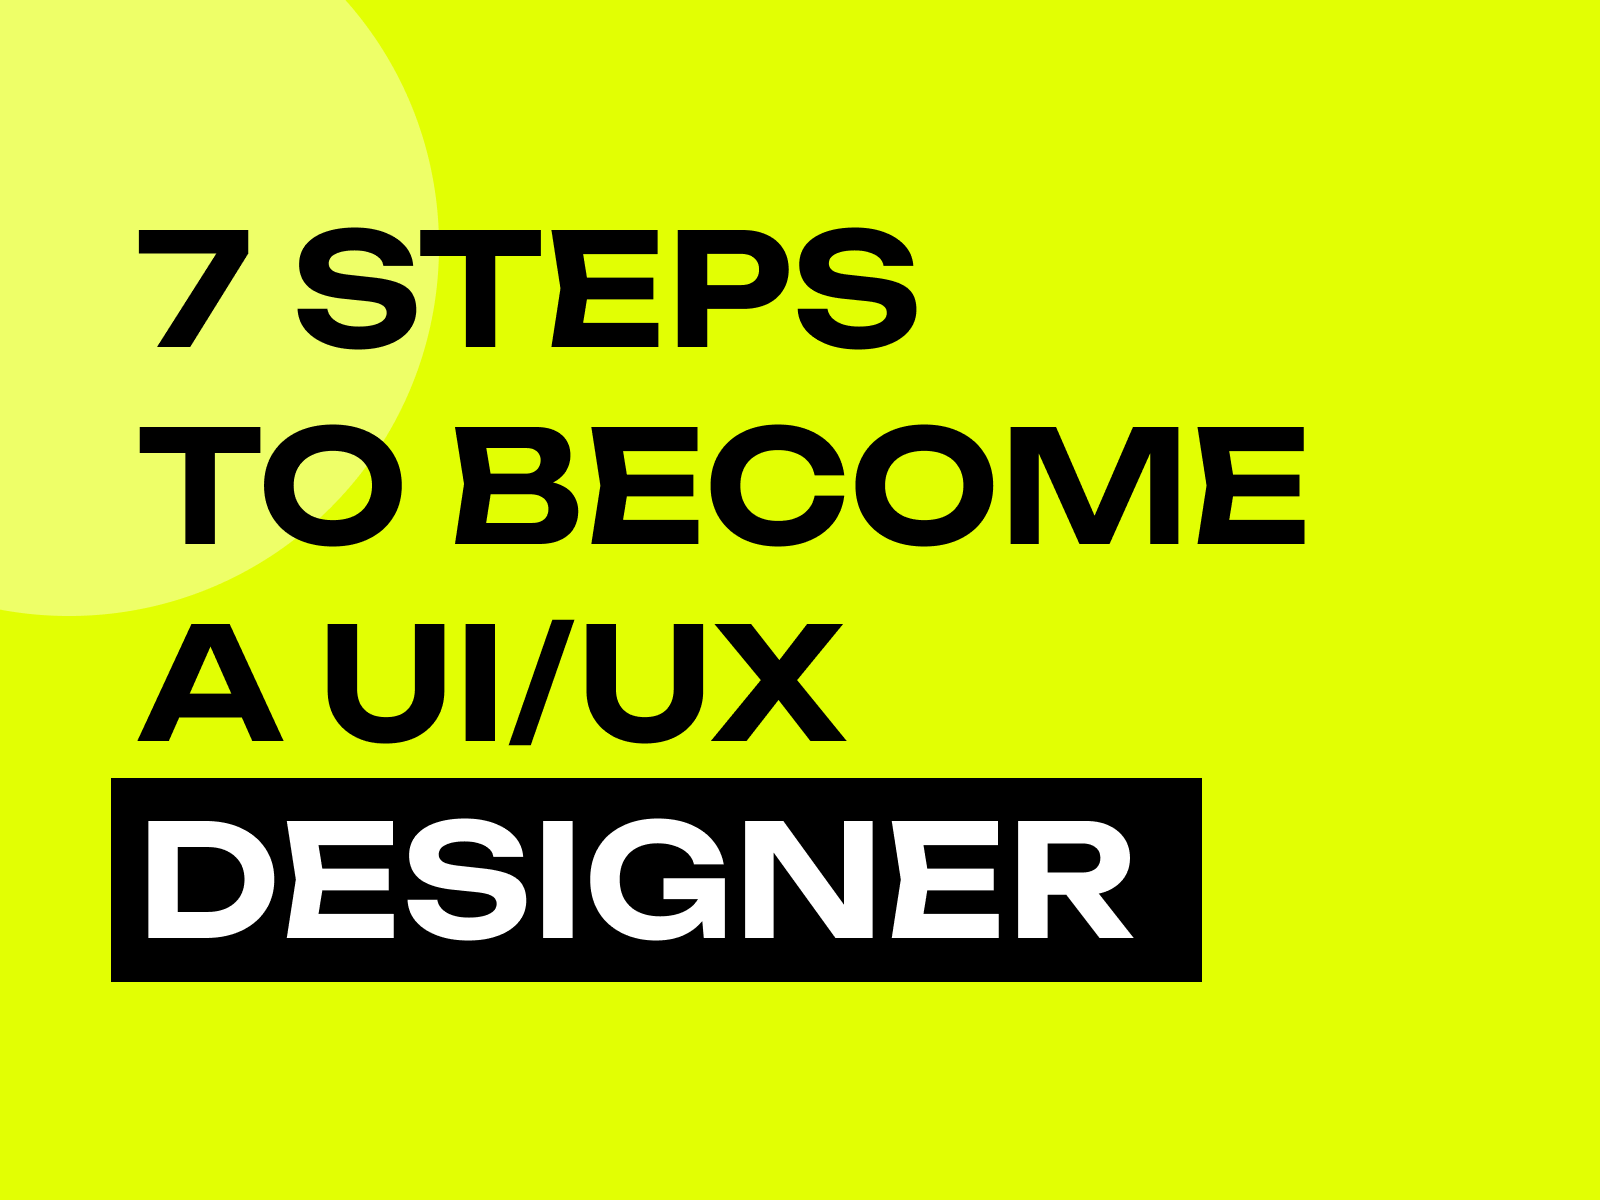 7 Steps to Become a UI/UX Designer Image